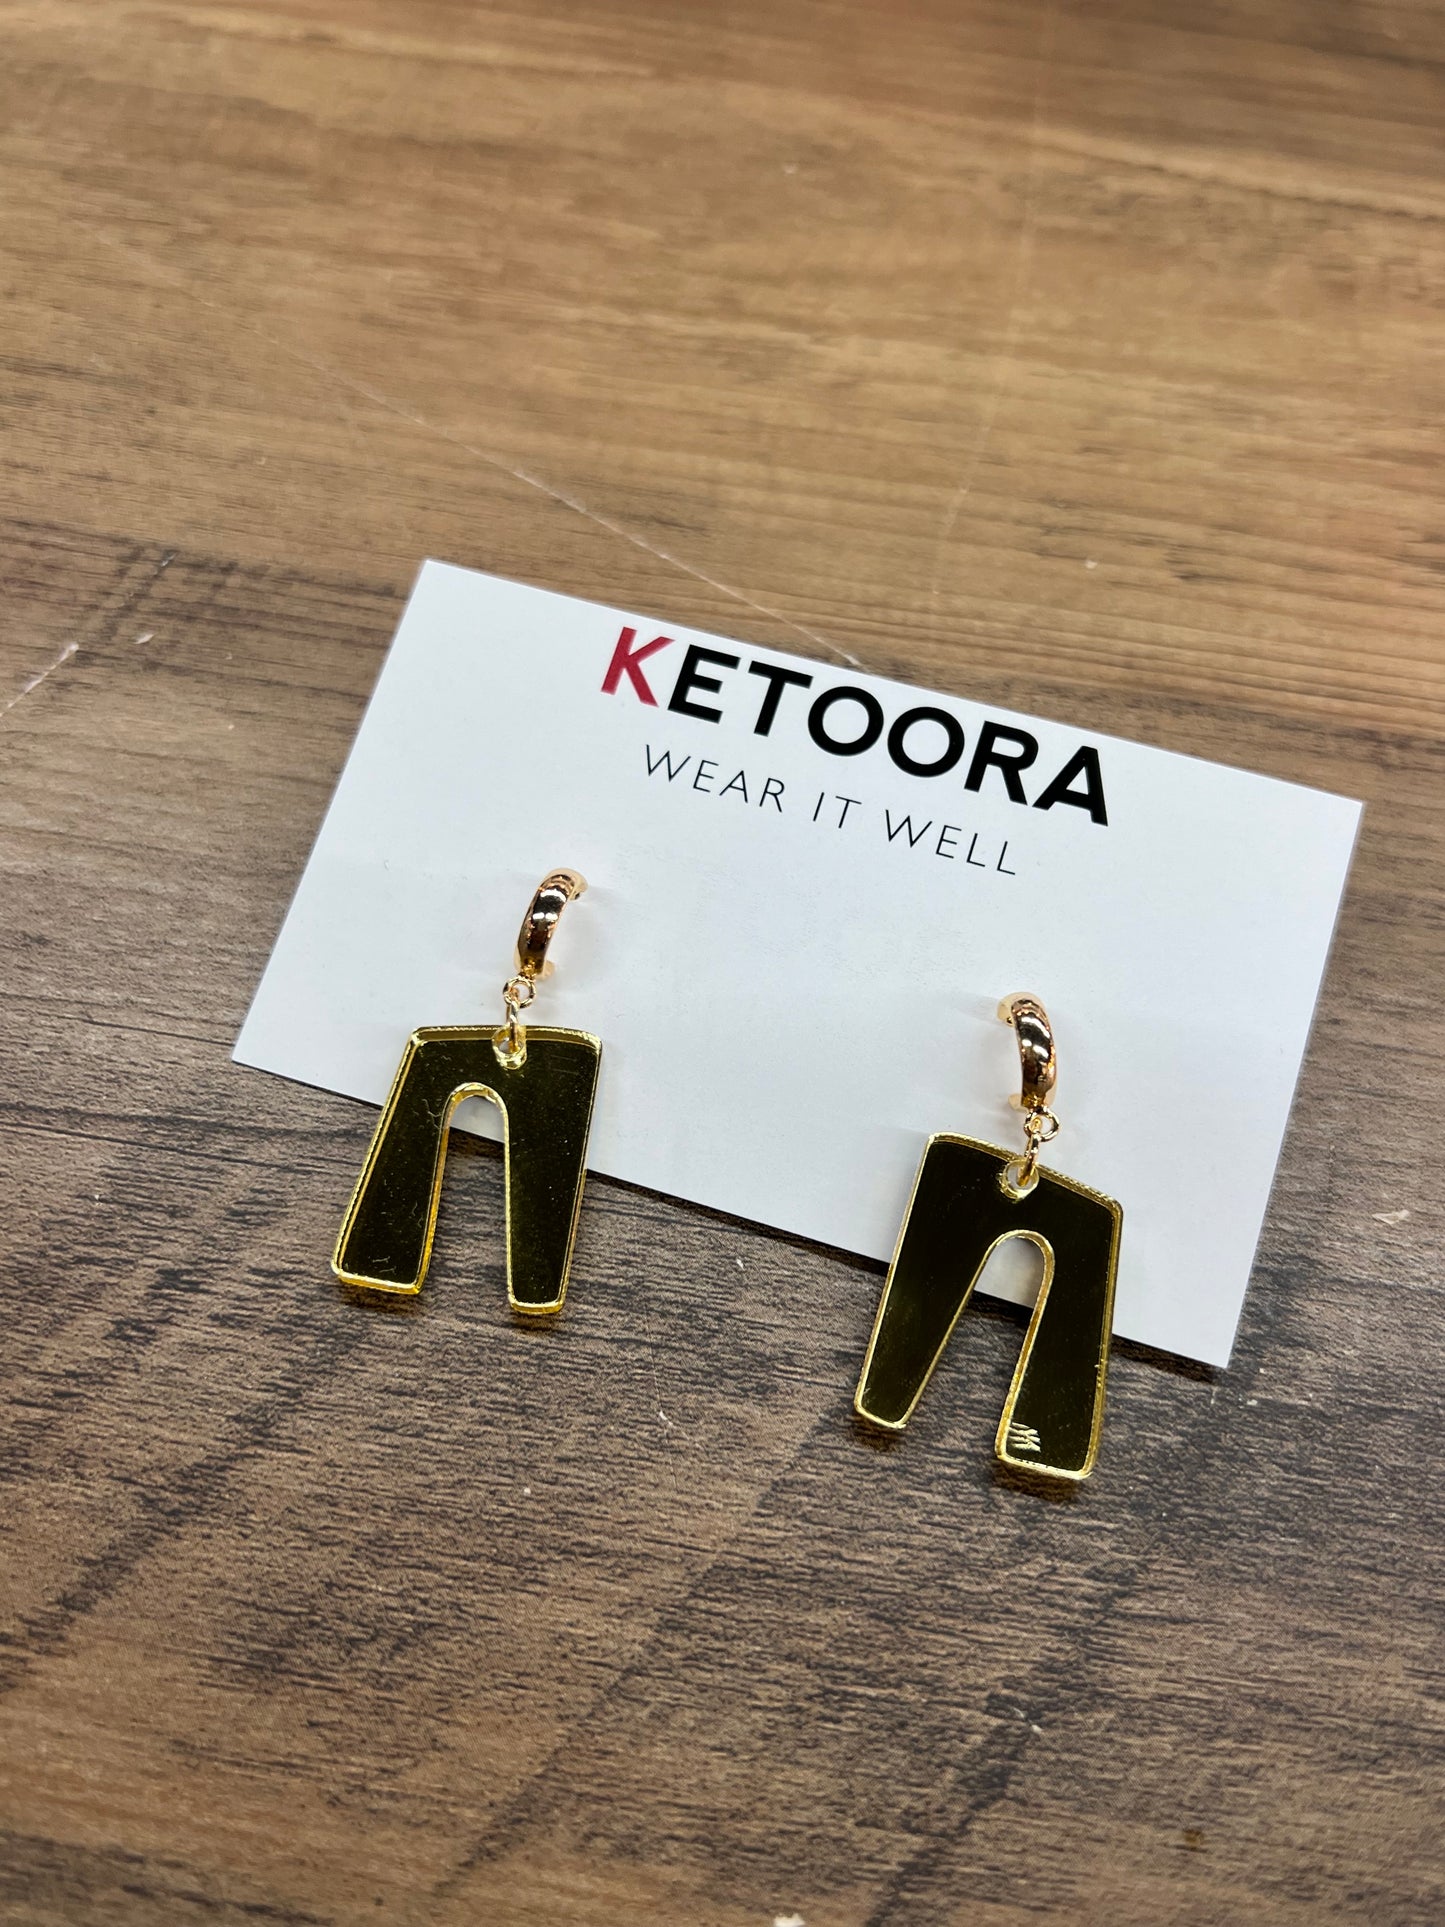 Ketoora Mini’s for the Holidays